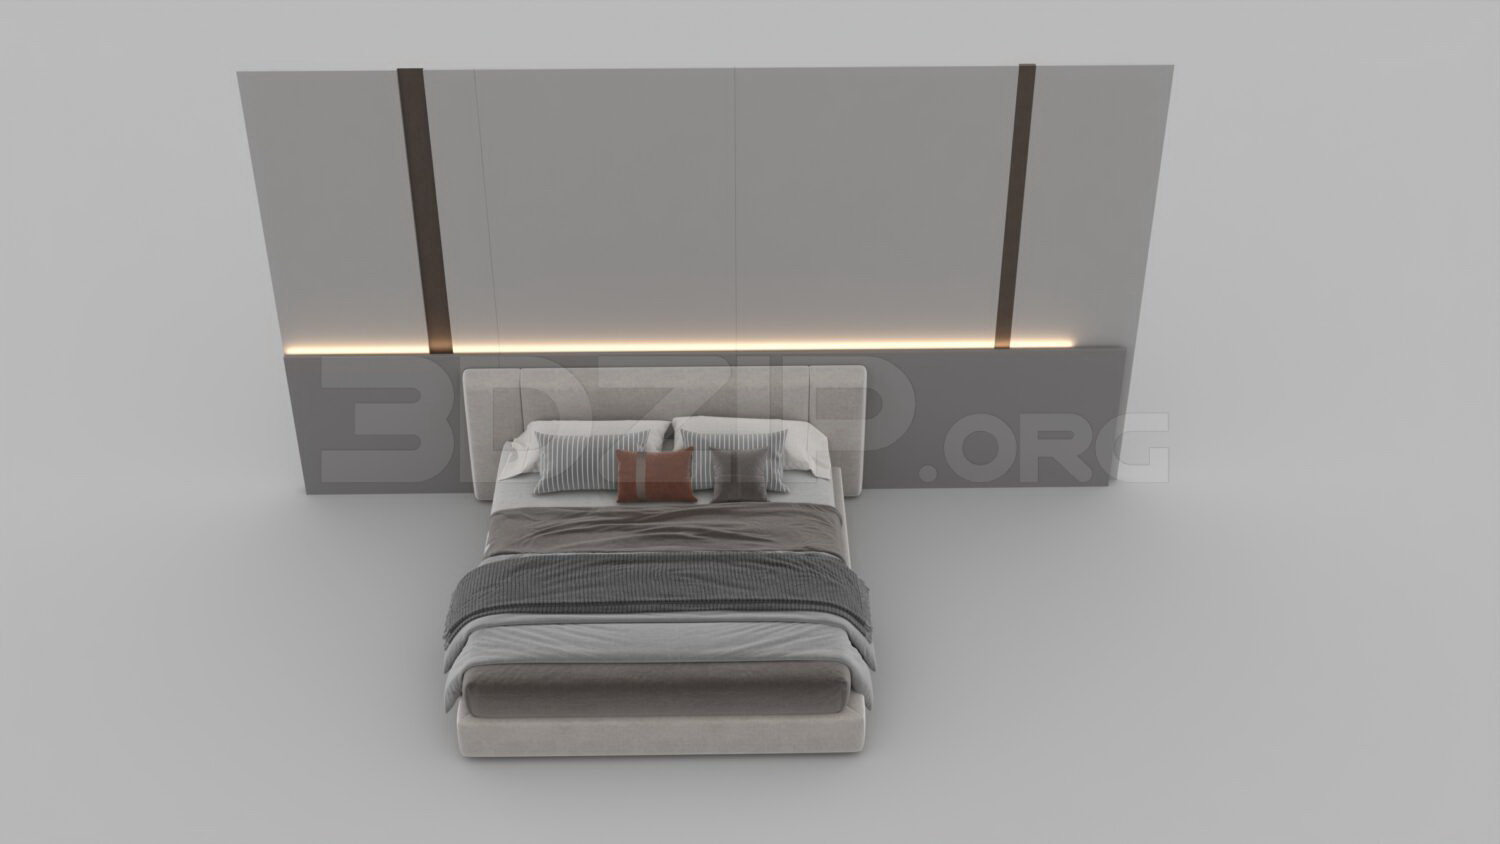 1680. Free 3D Bed Model Download